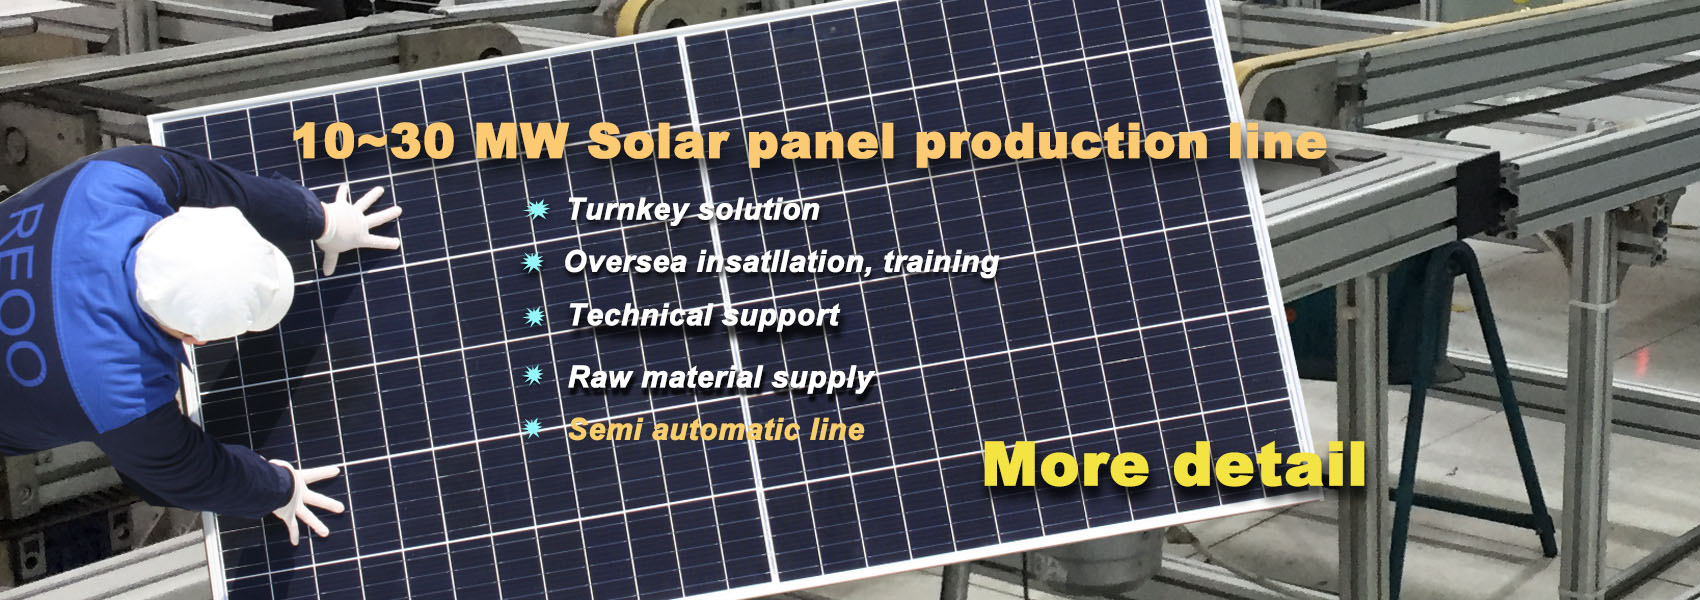 10 MW solar panel production line